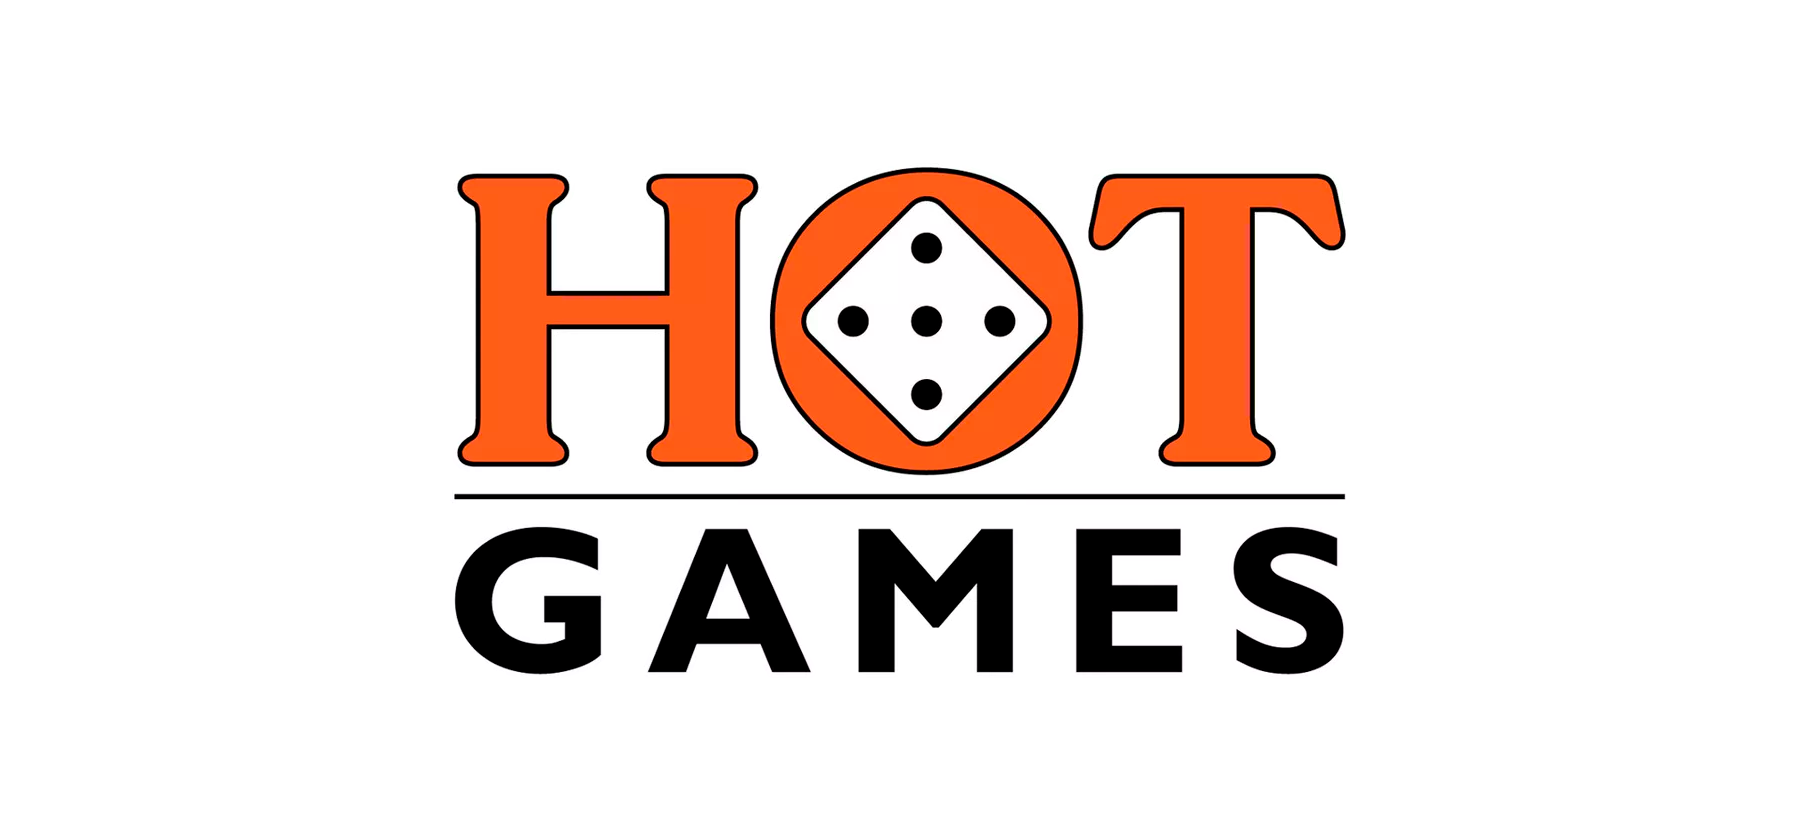 HOT Games